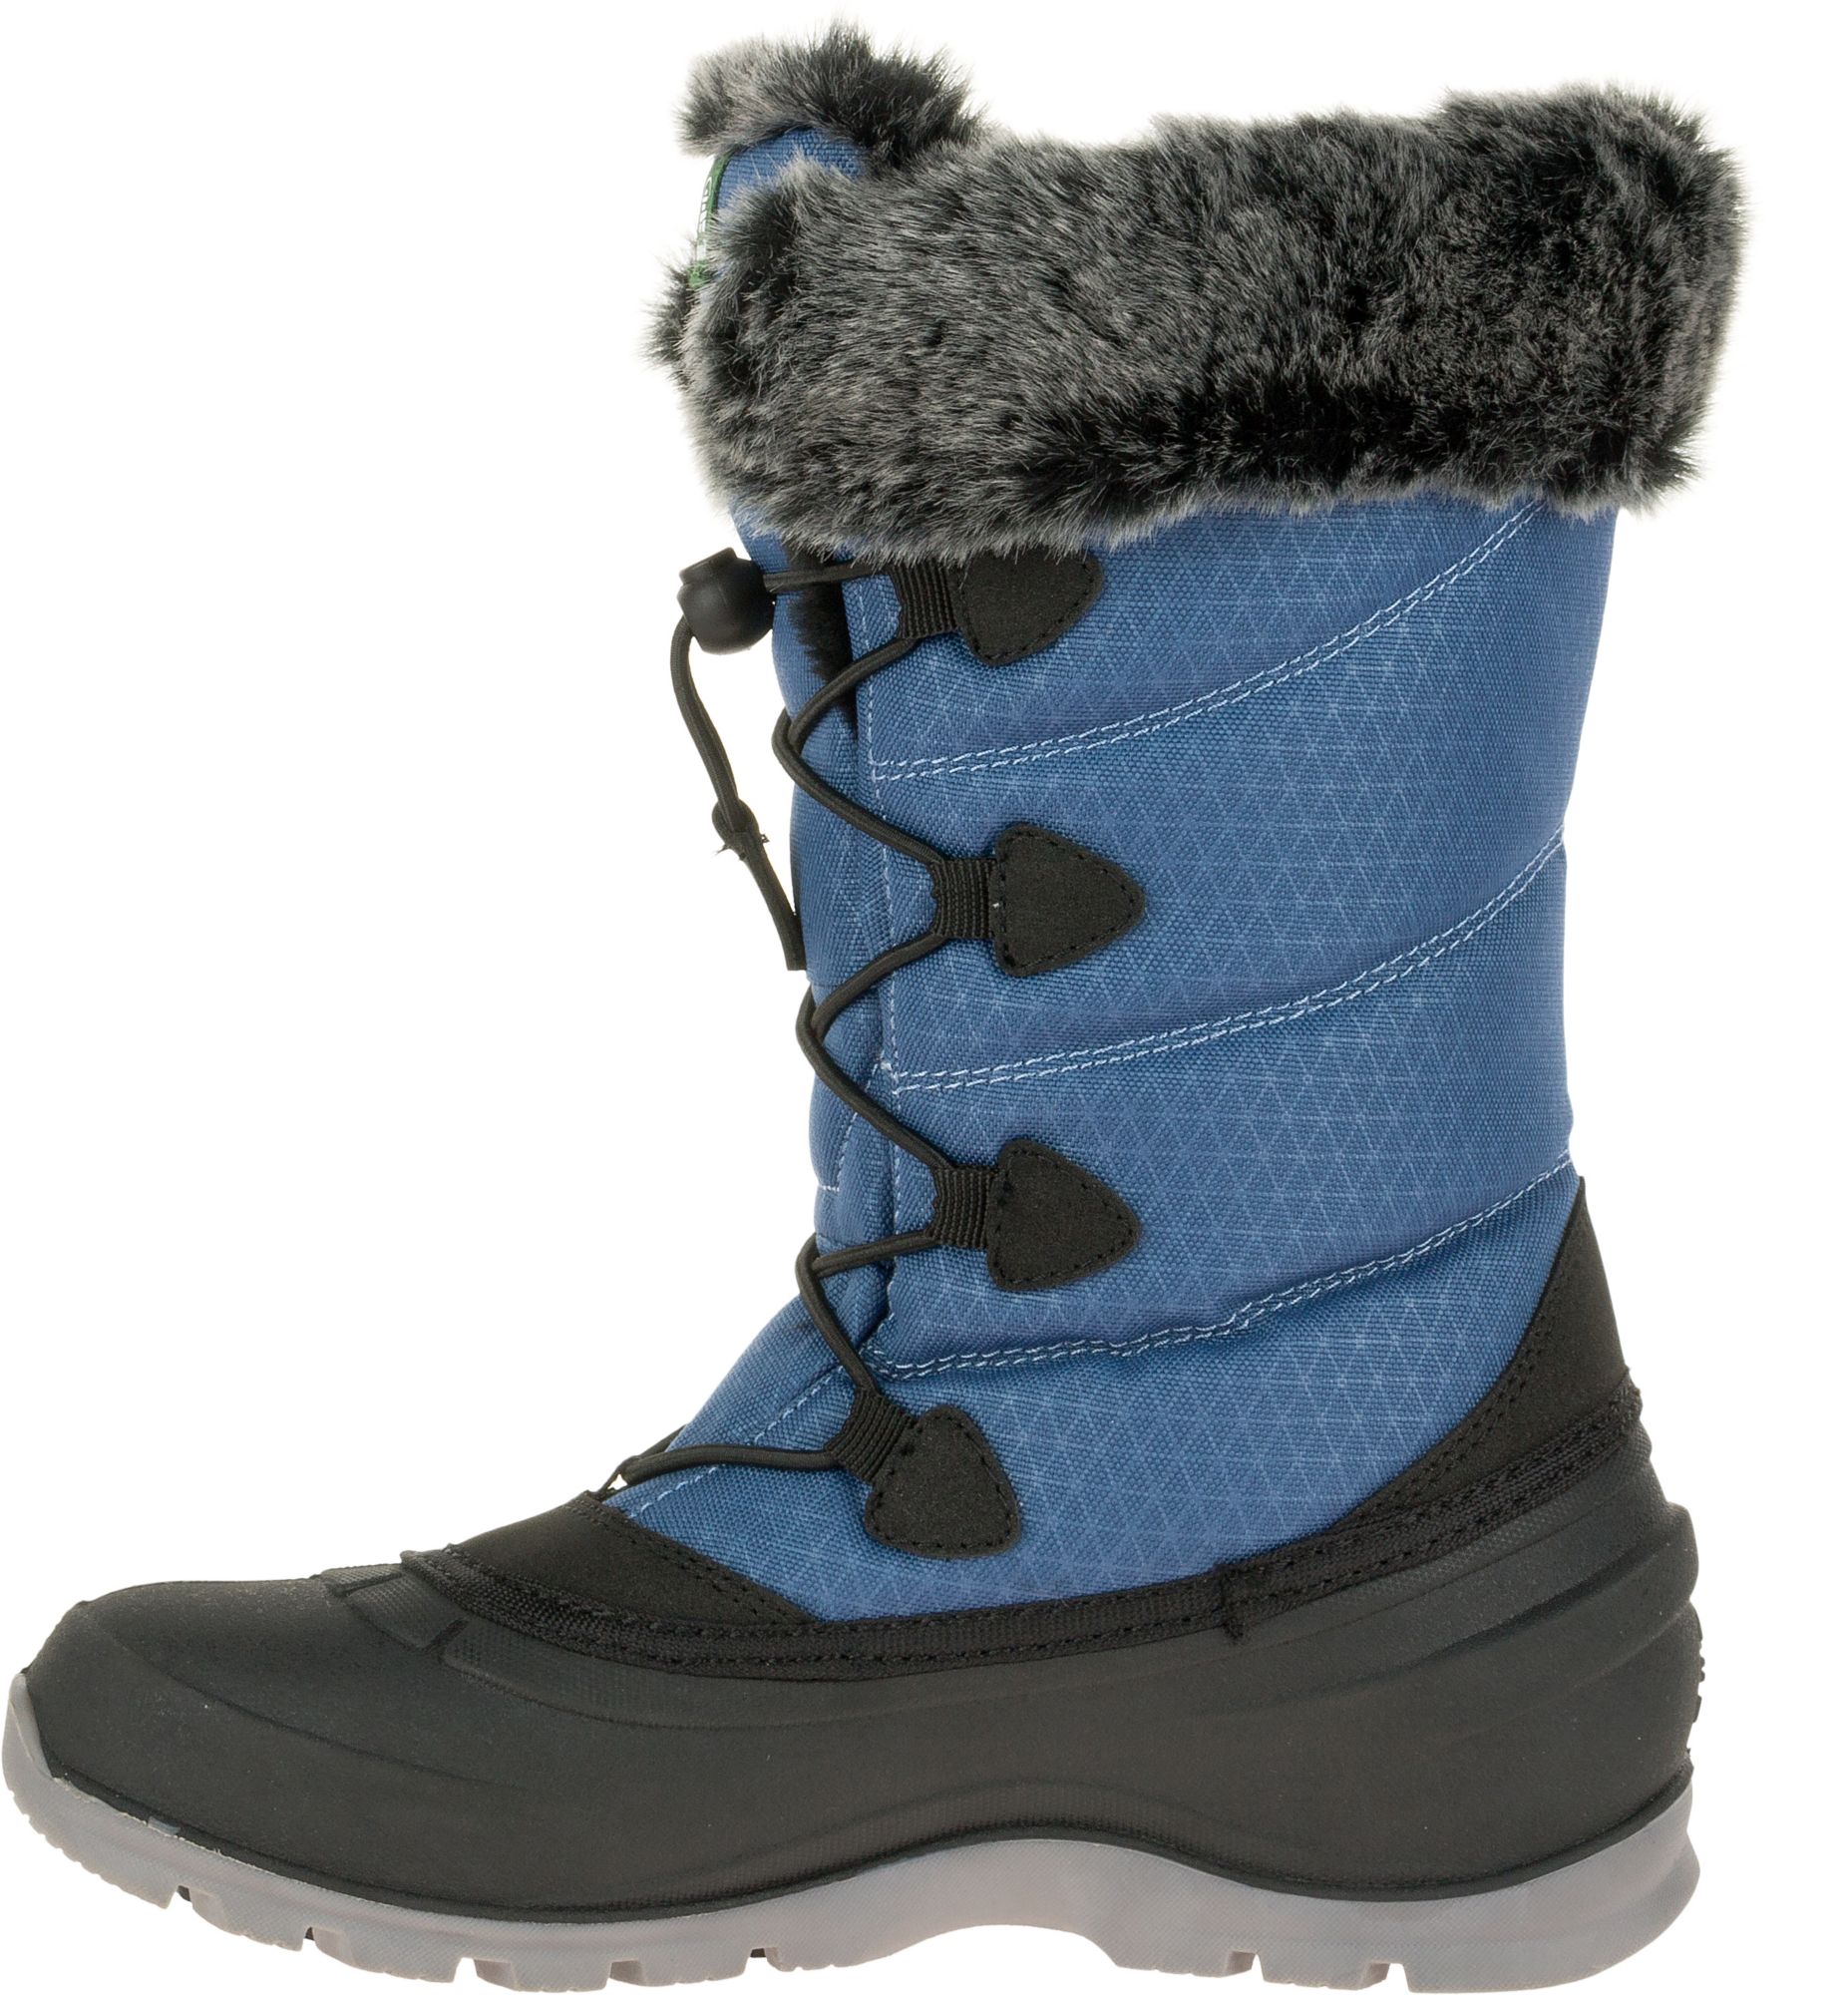 kamik women's momentum2 200g waterproof winter boots